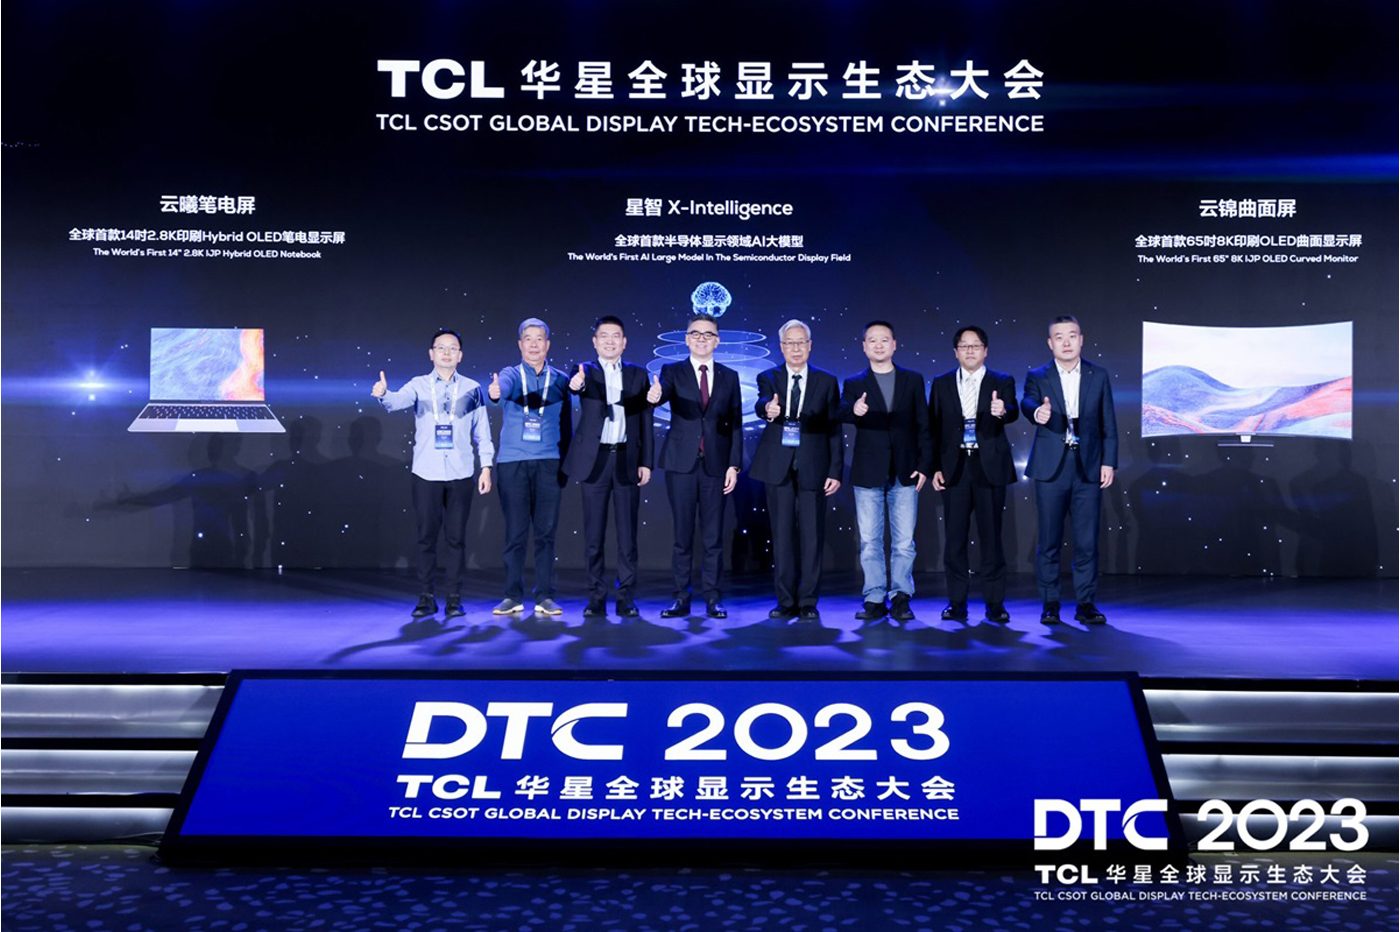 TCL-DTC-2023